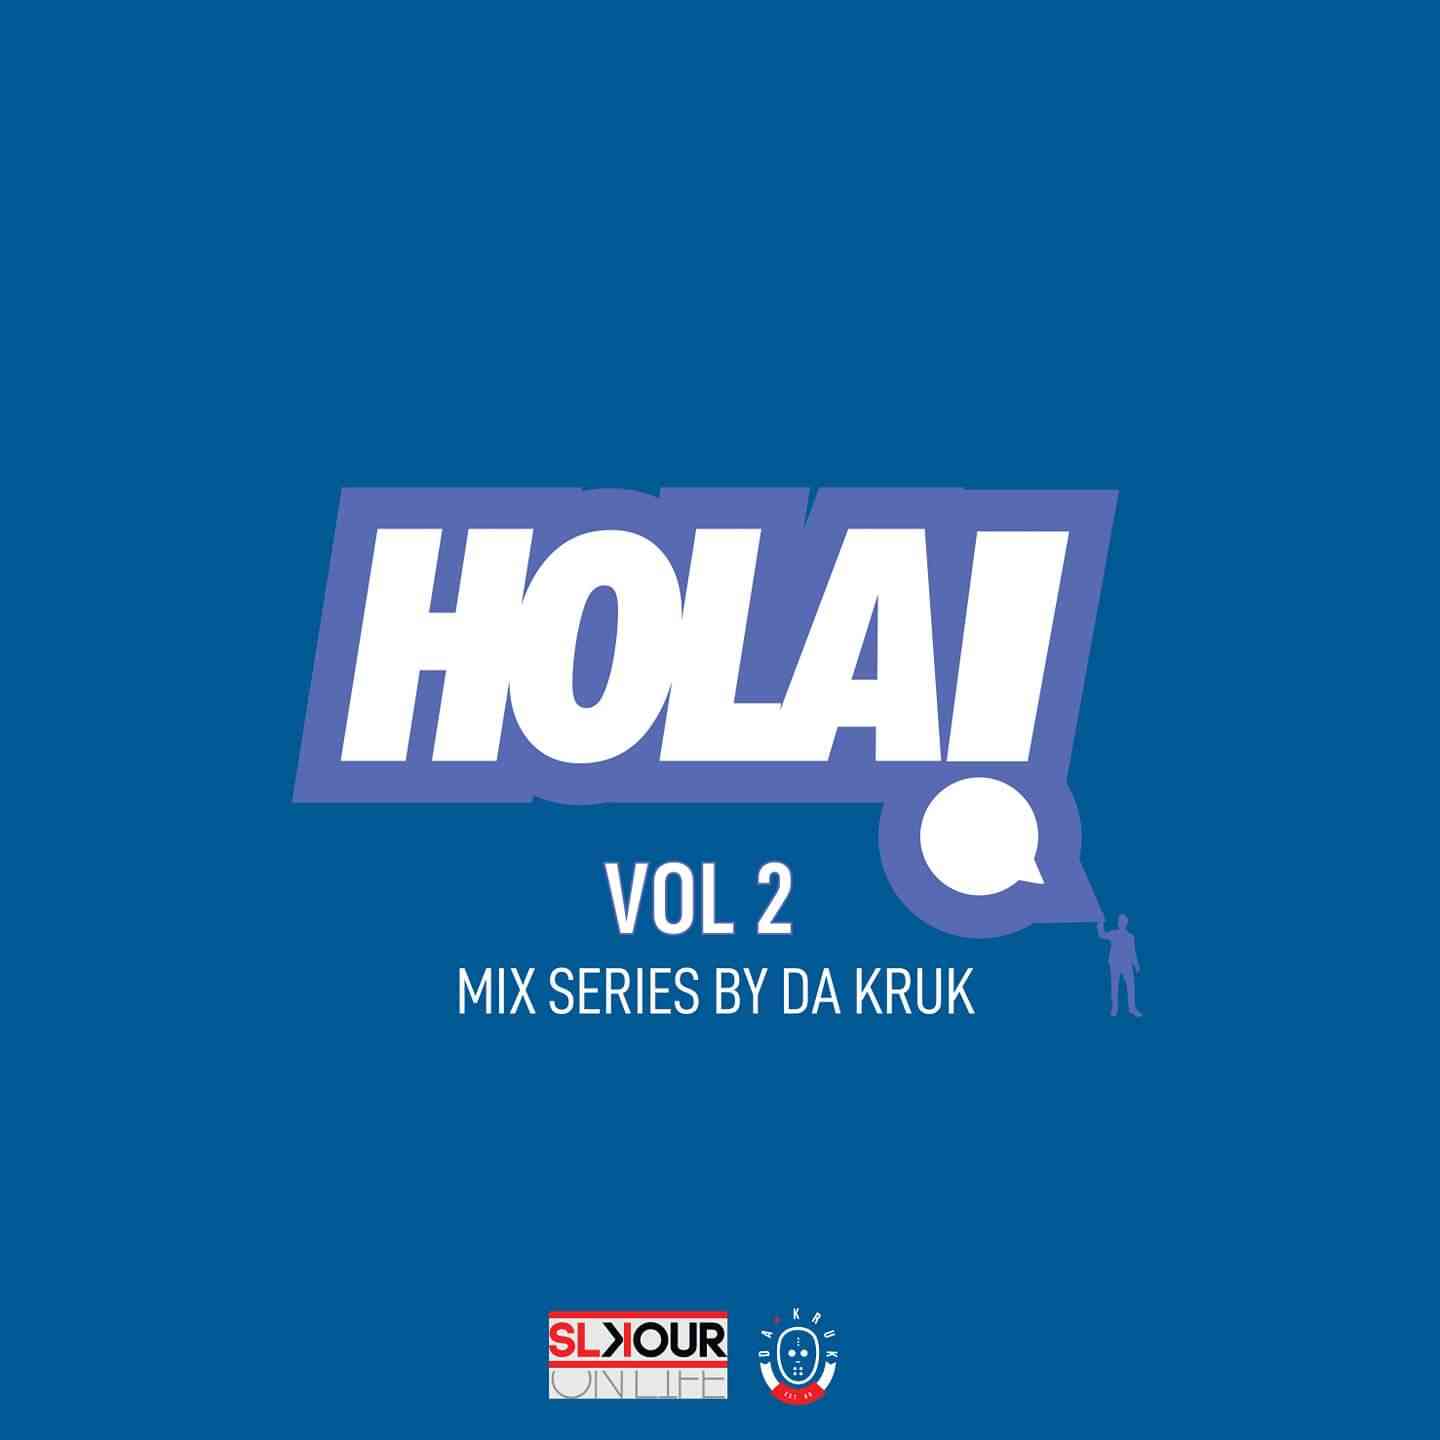 Da Kruk HOLA Vol 2 Mix 